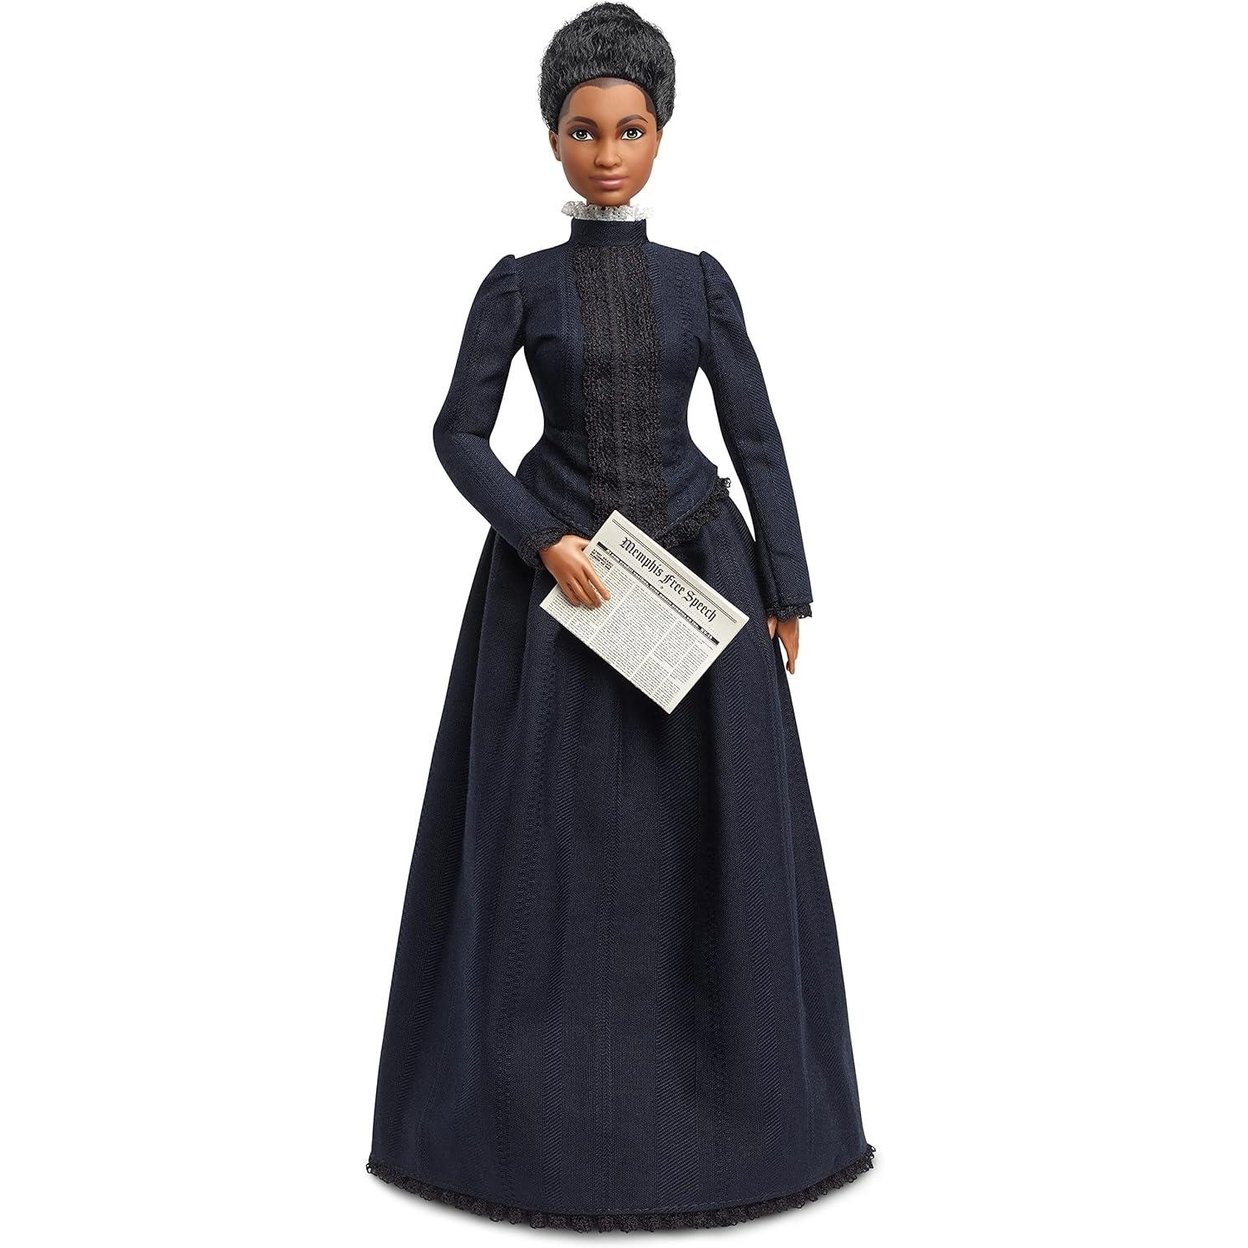 Mattel Ida B Wells Barbie Doll Journalist Activist Equality Inspiring Women